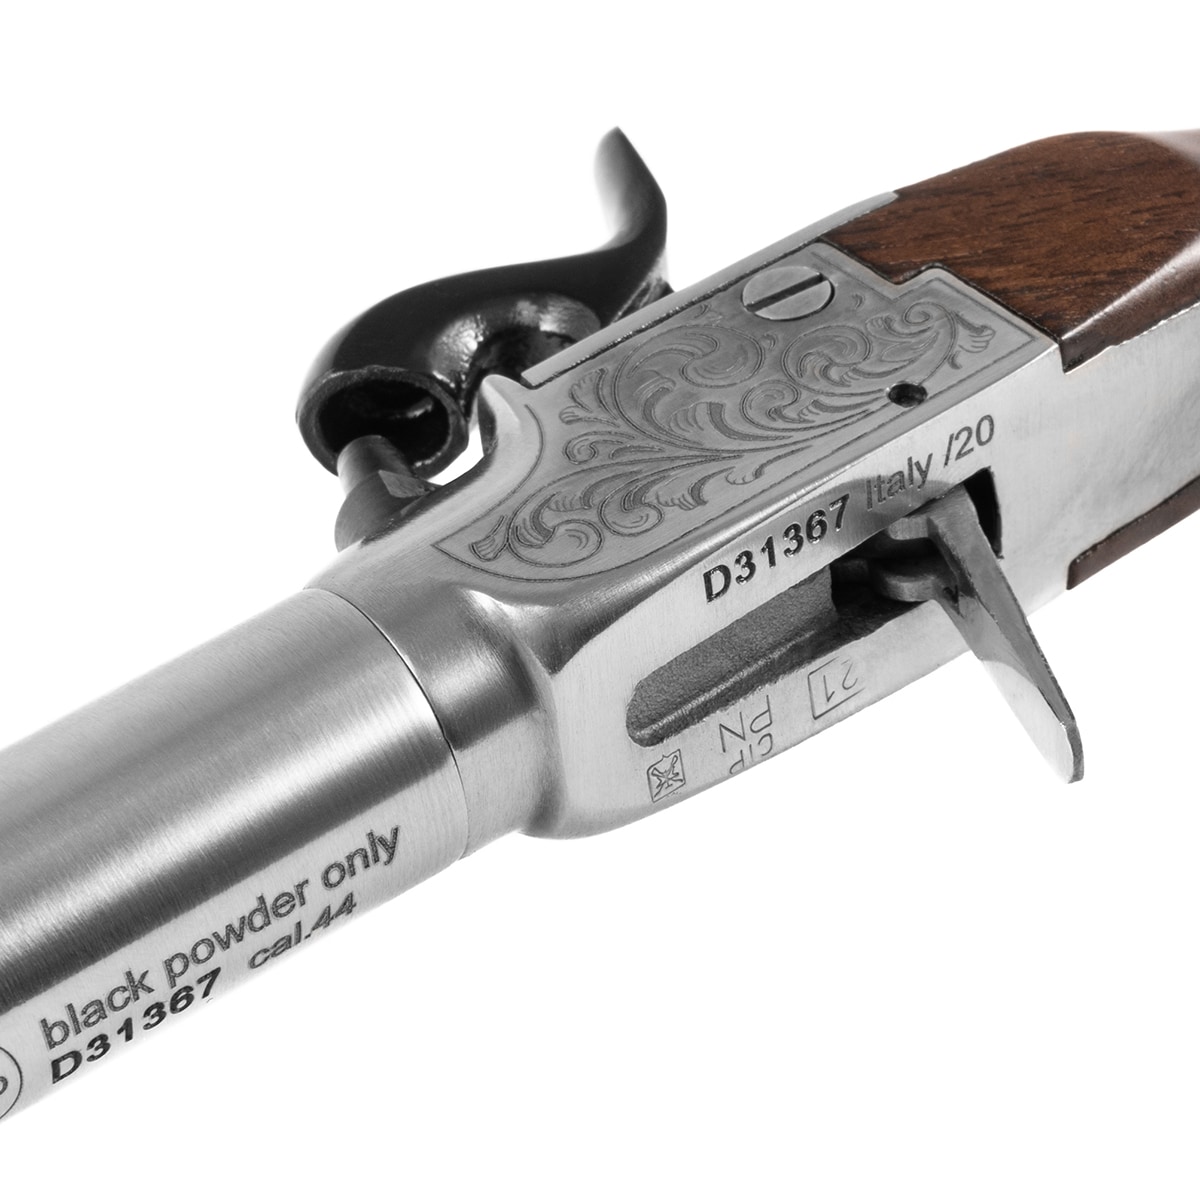 Pistolet czarnoprochowy Pedersoli Derringer Liegi Deluxe .44